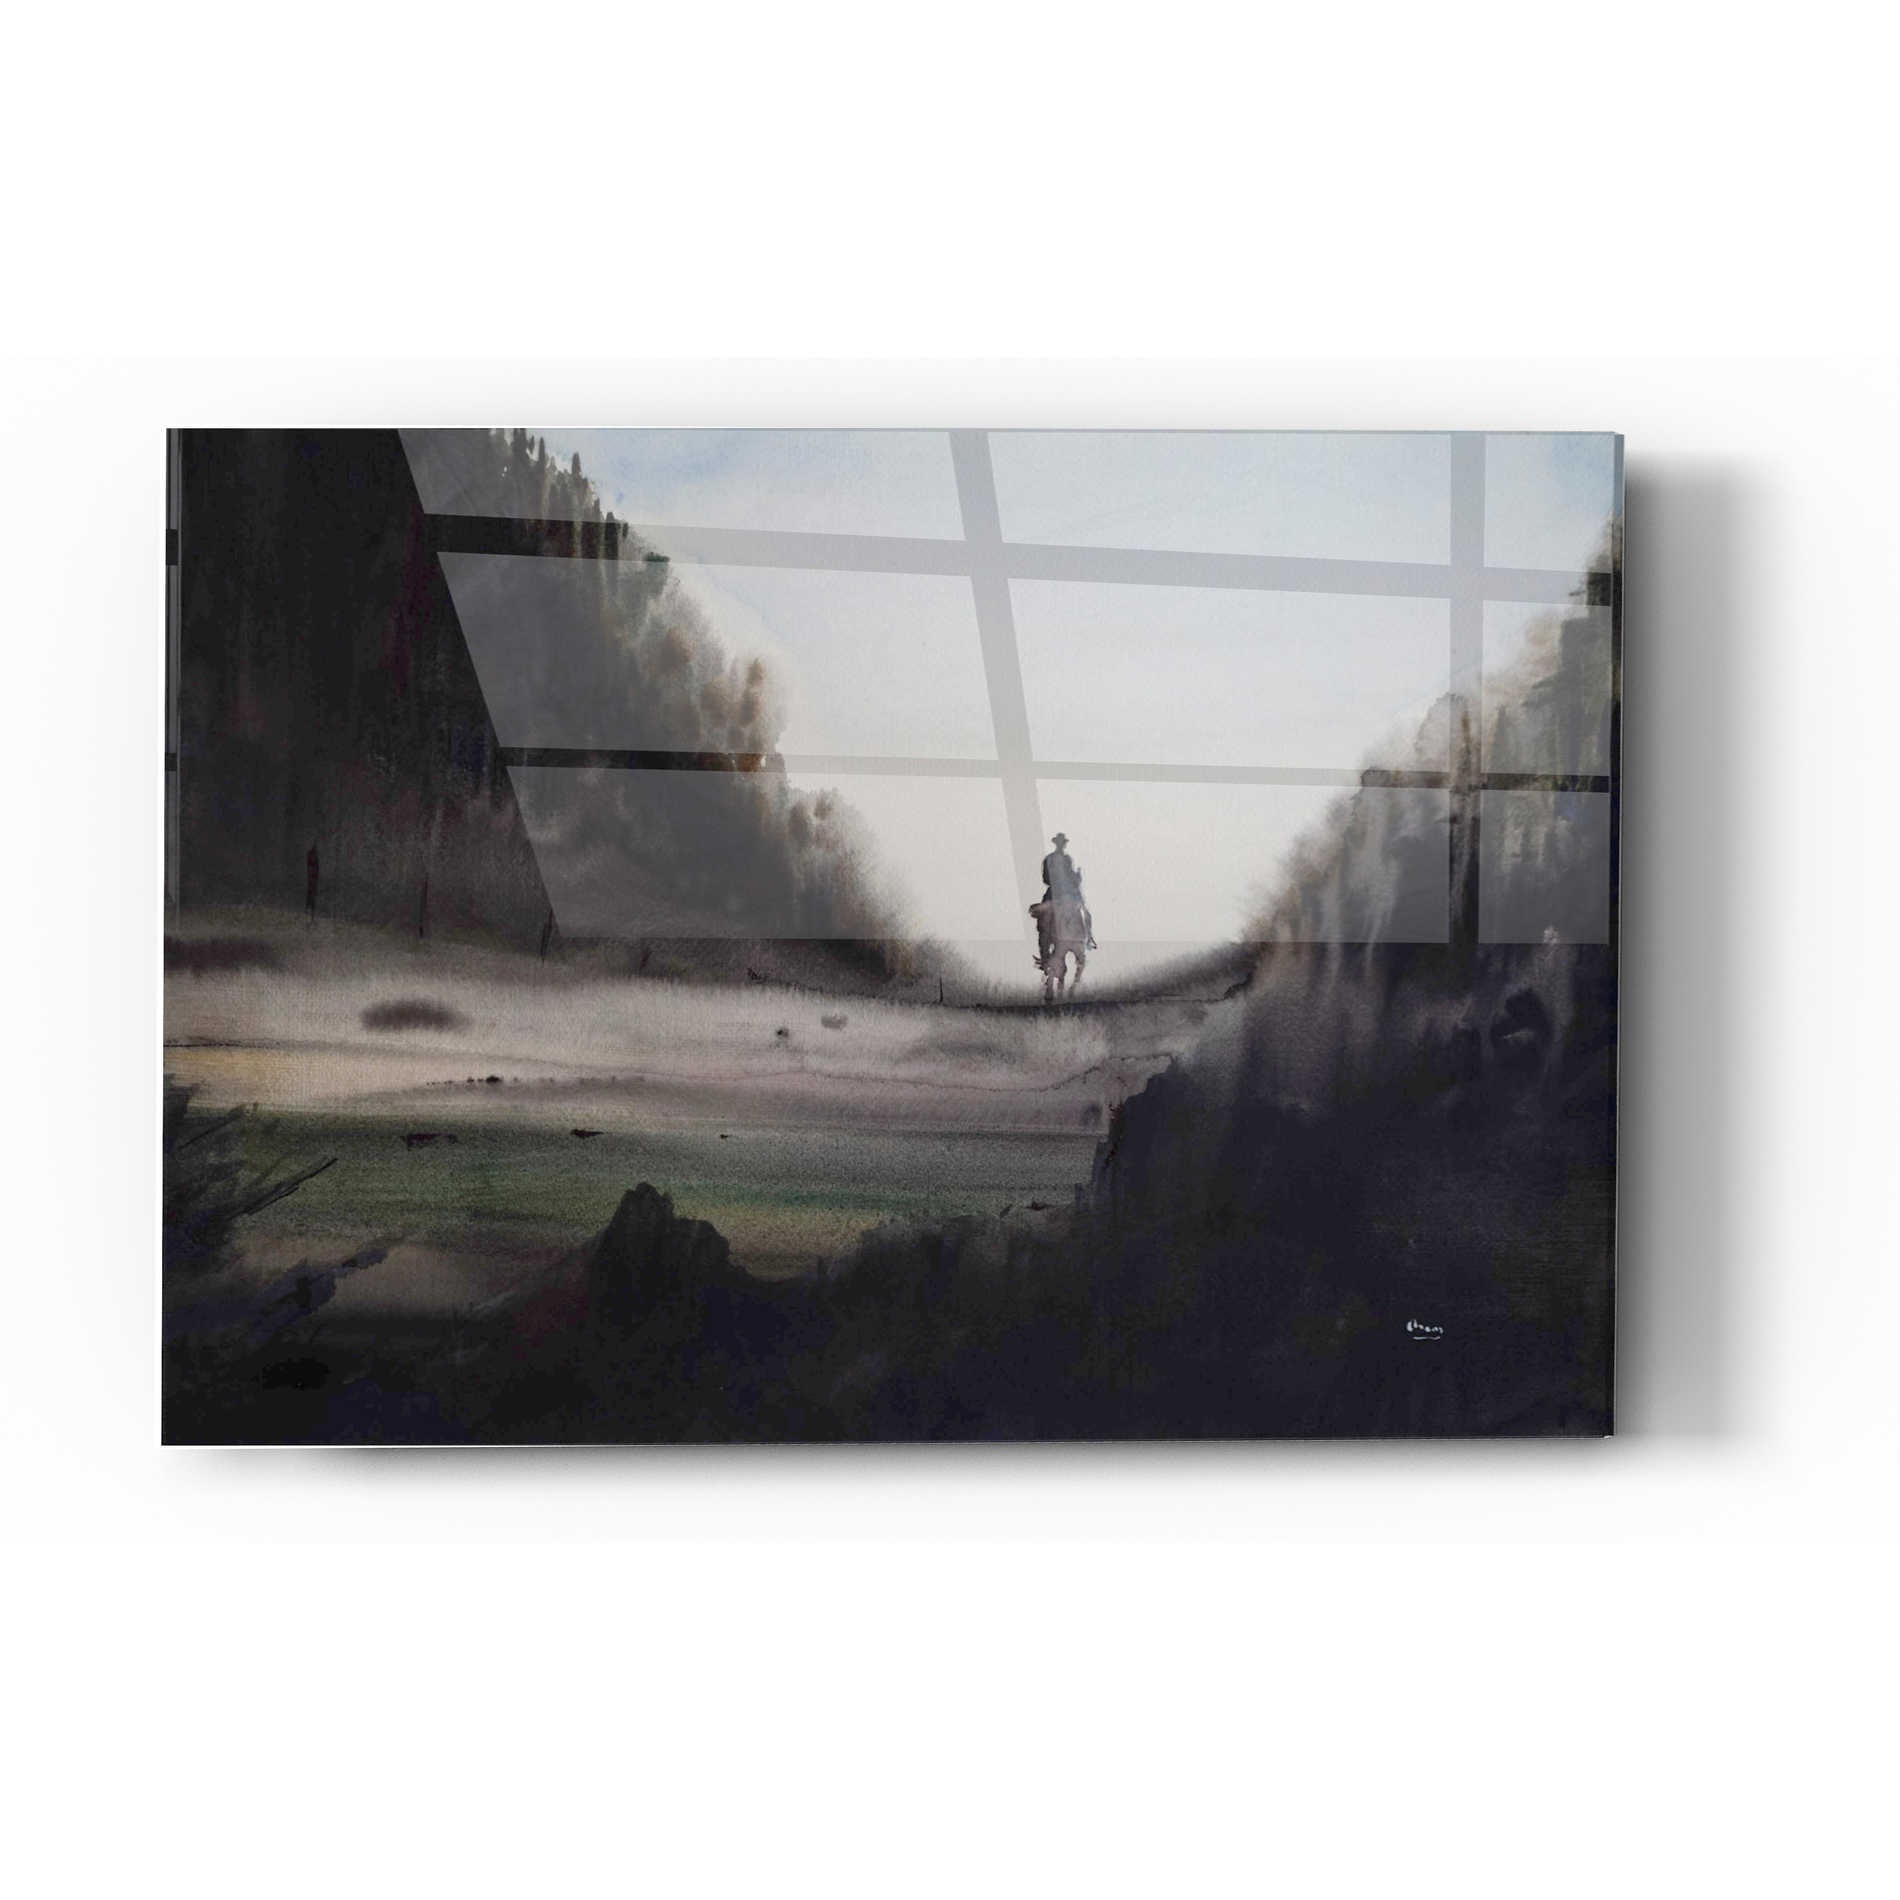 Epic Art 'Desolation' by Oscar Alvarez Pardo, Acrylic Glass Wall Art,12x16